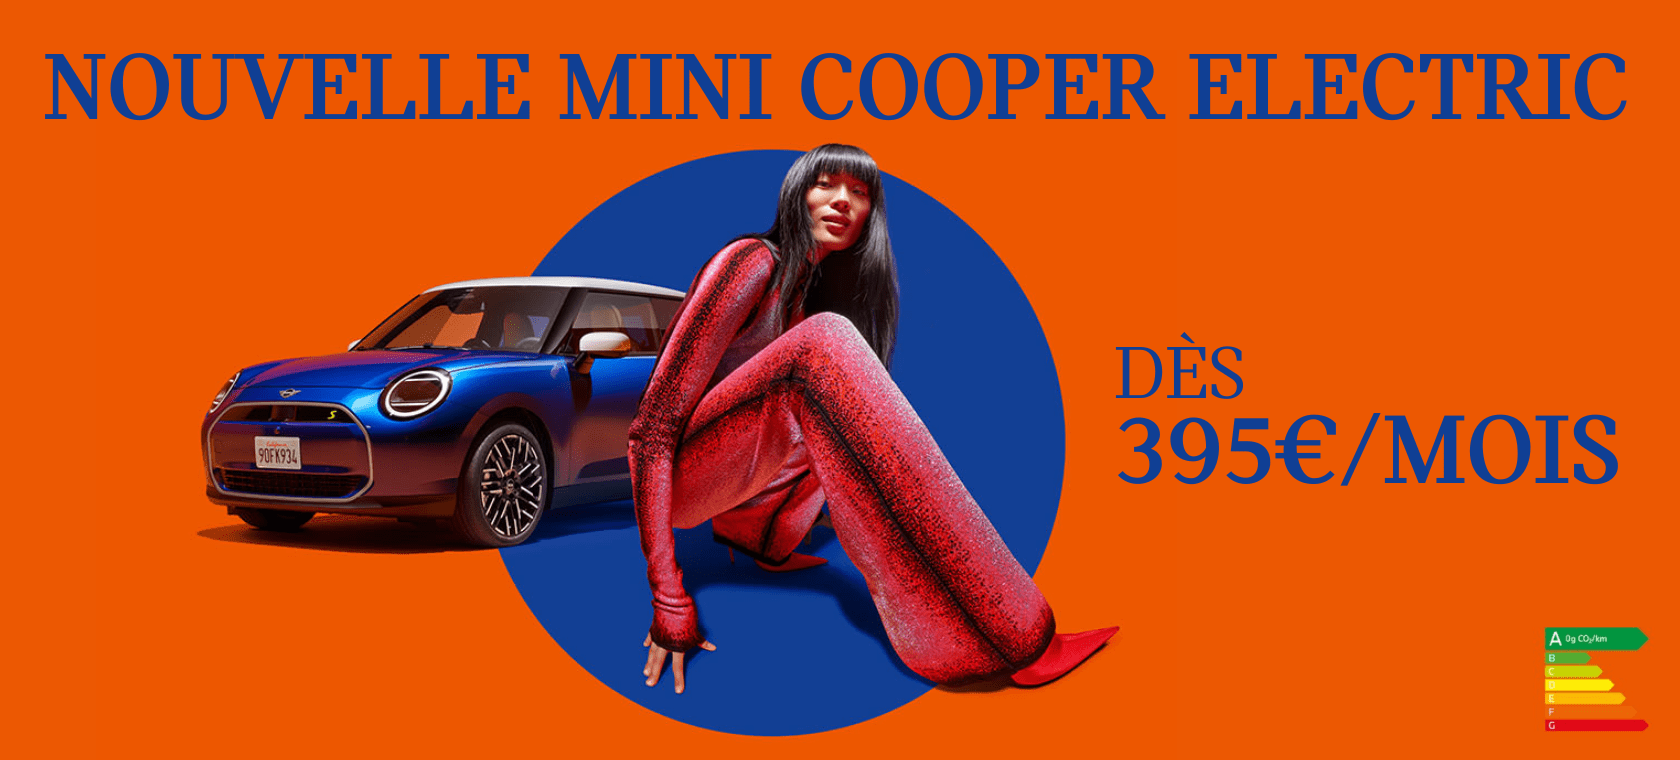 MINI Cooper Electric